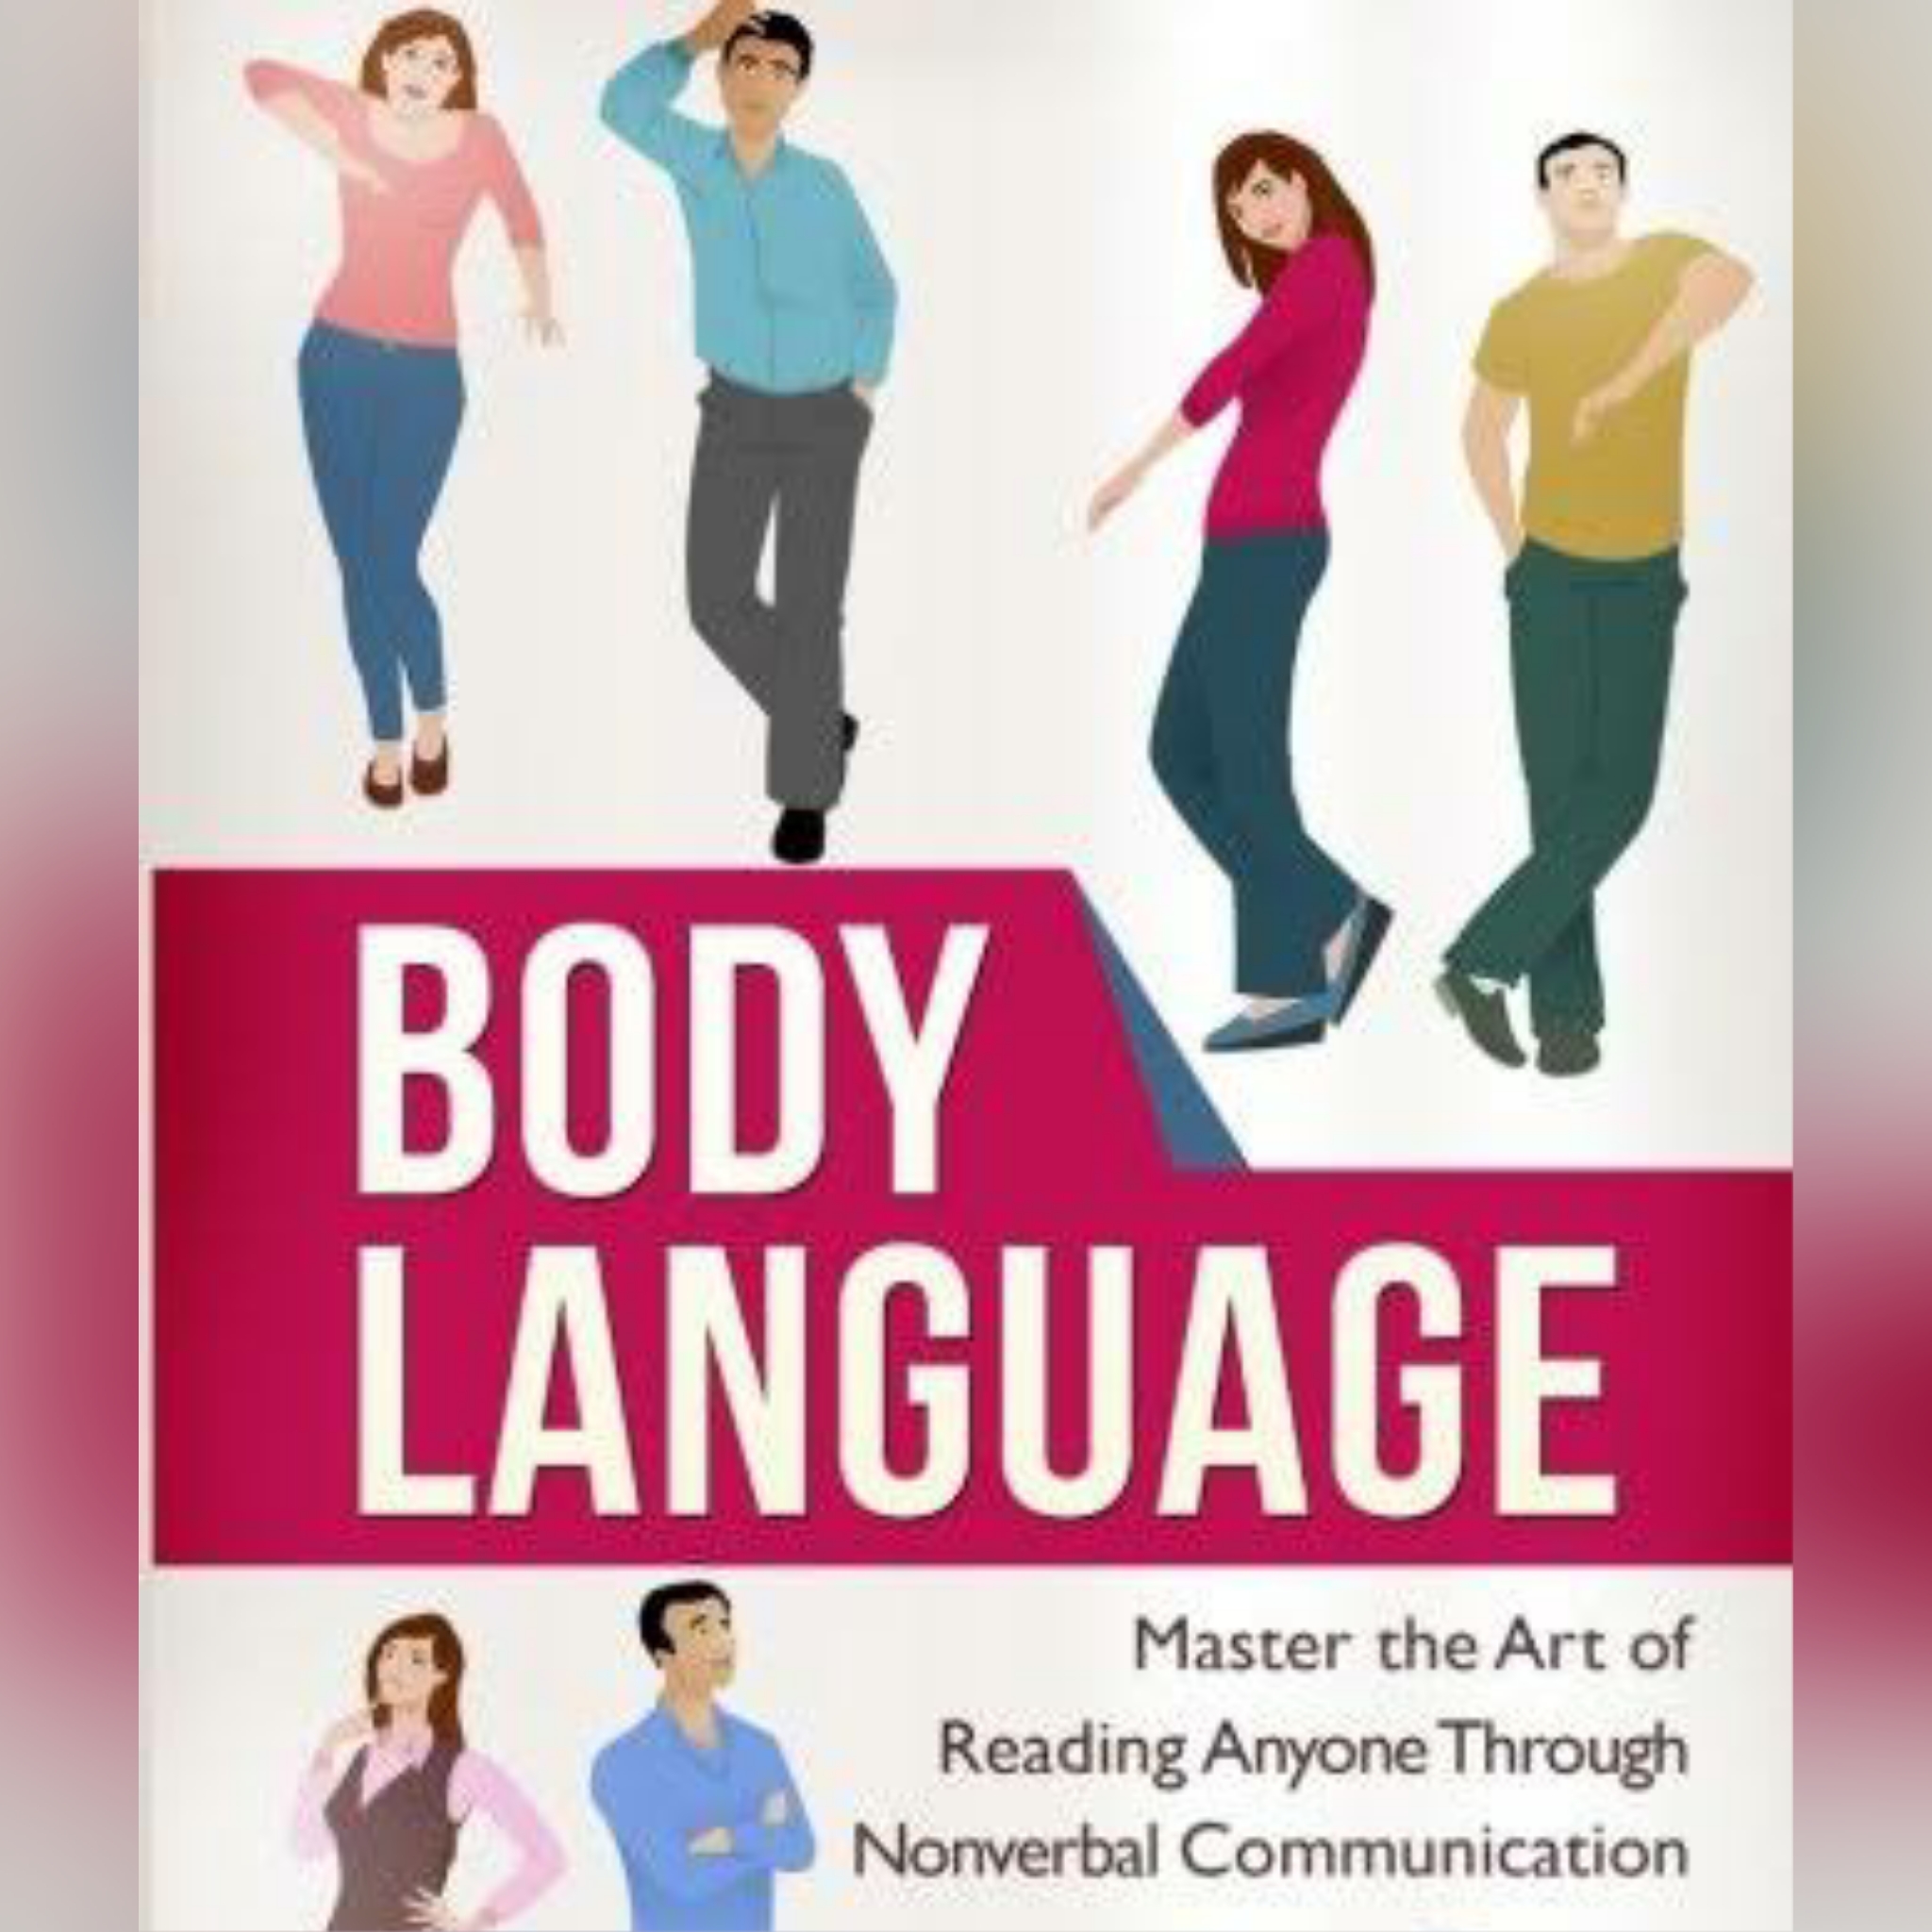 Body communication. Язык тела картинки. Язык тела арт. Body language nonverbal communication. Body language Queen.